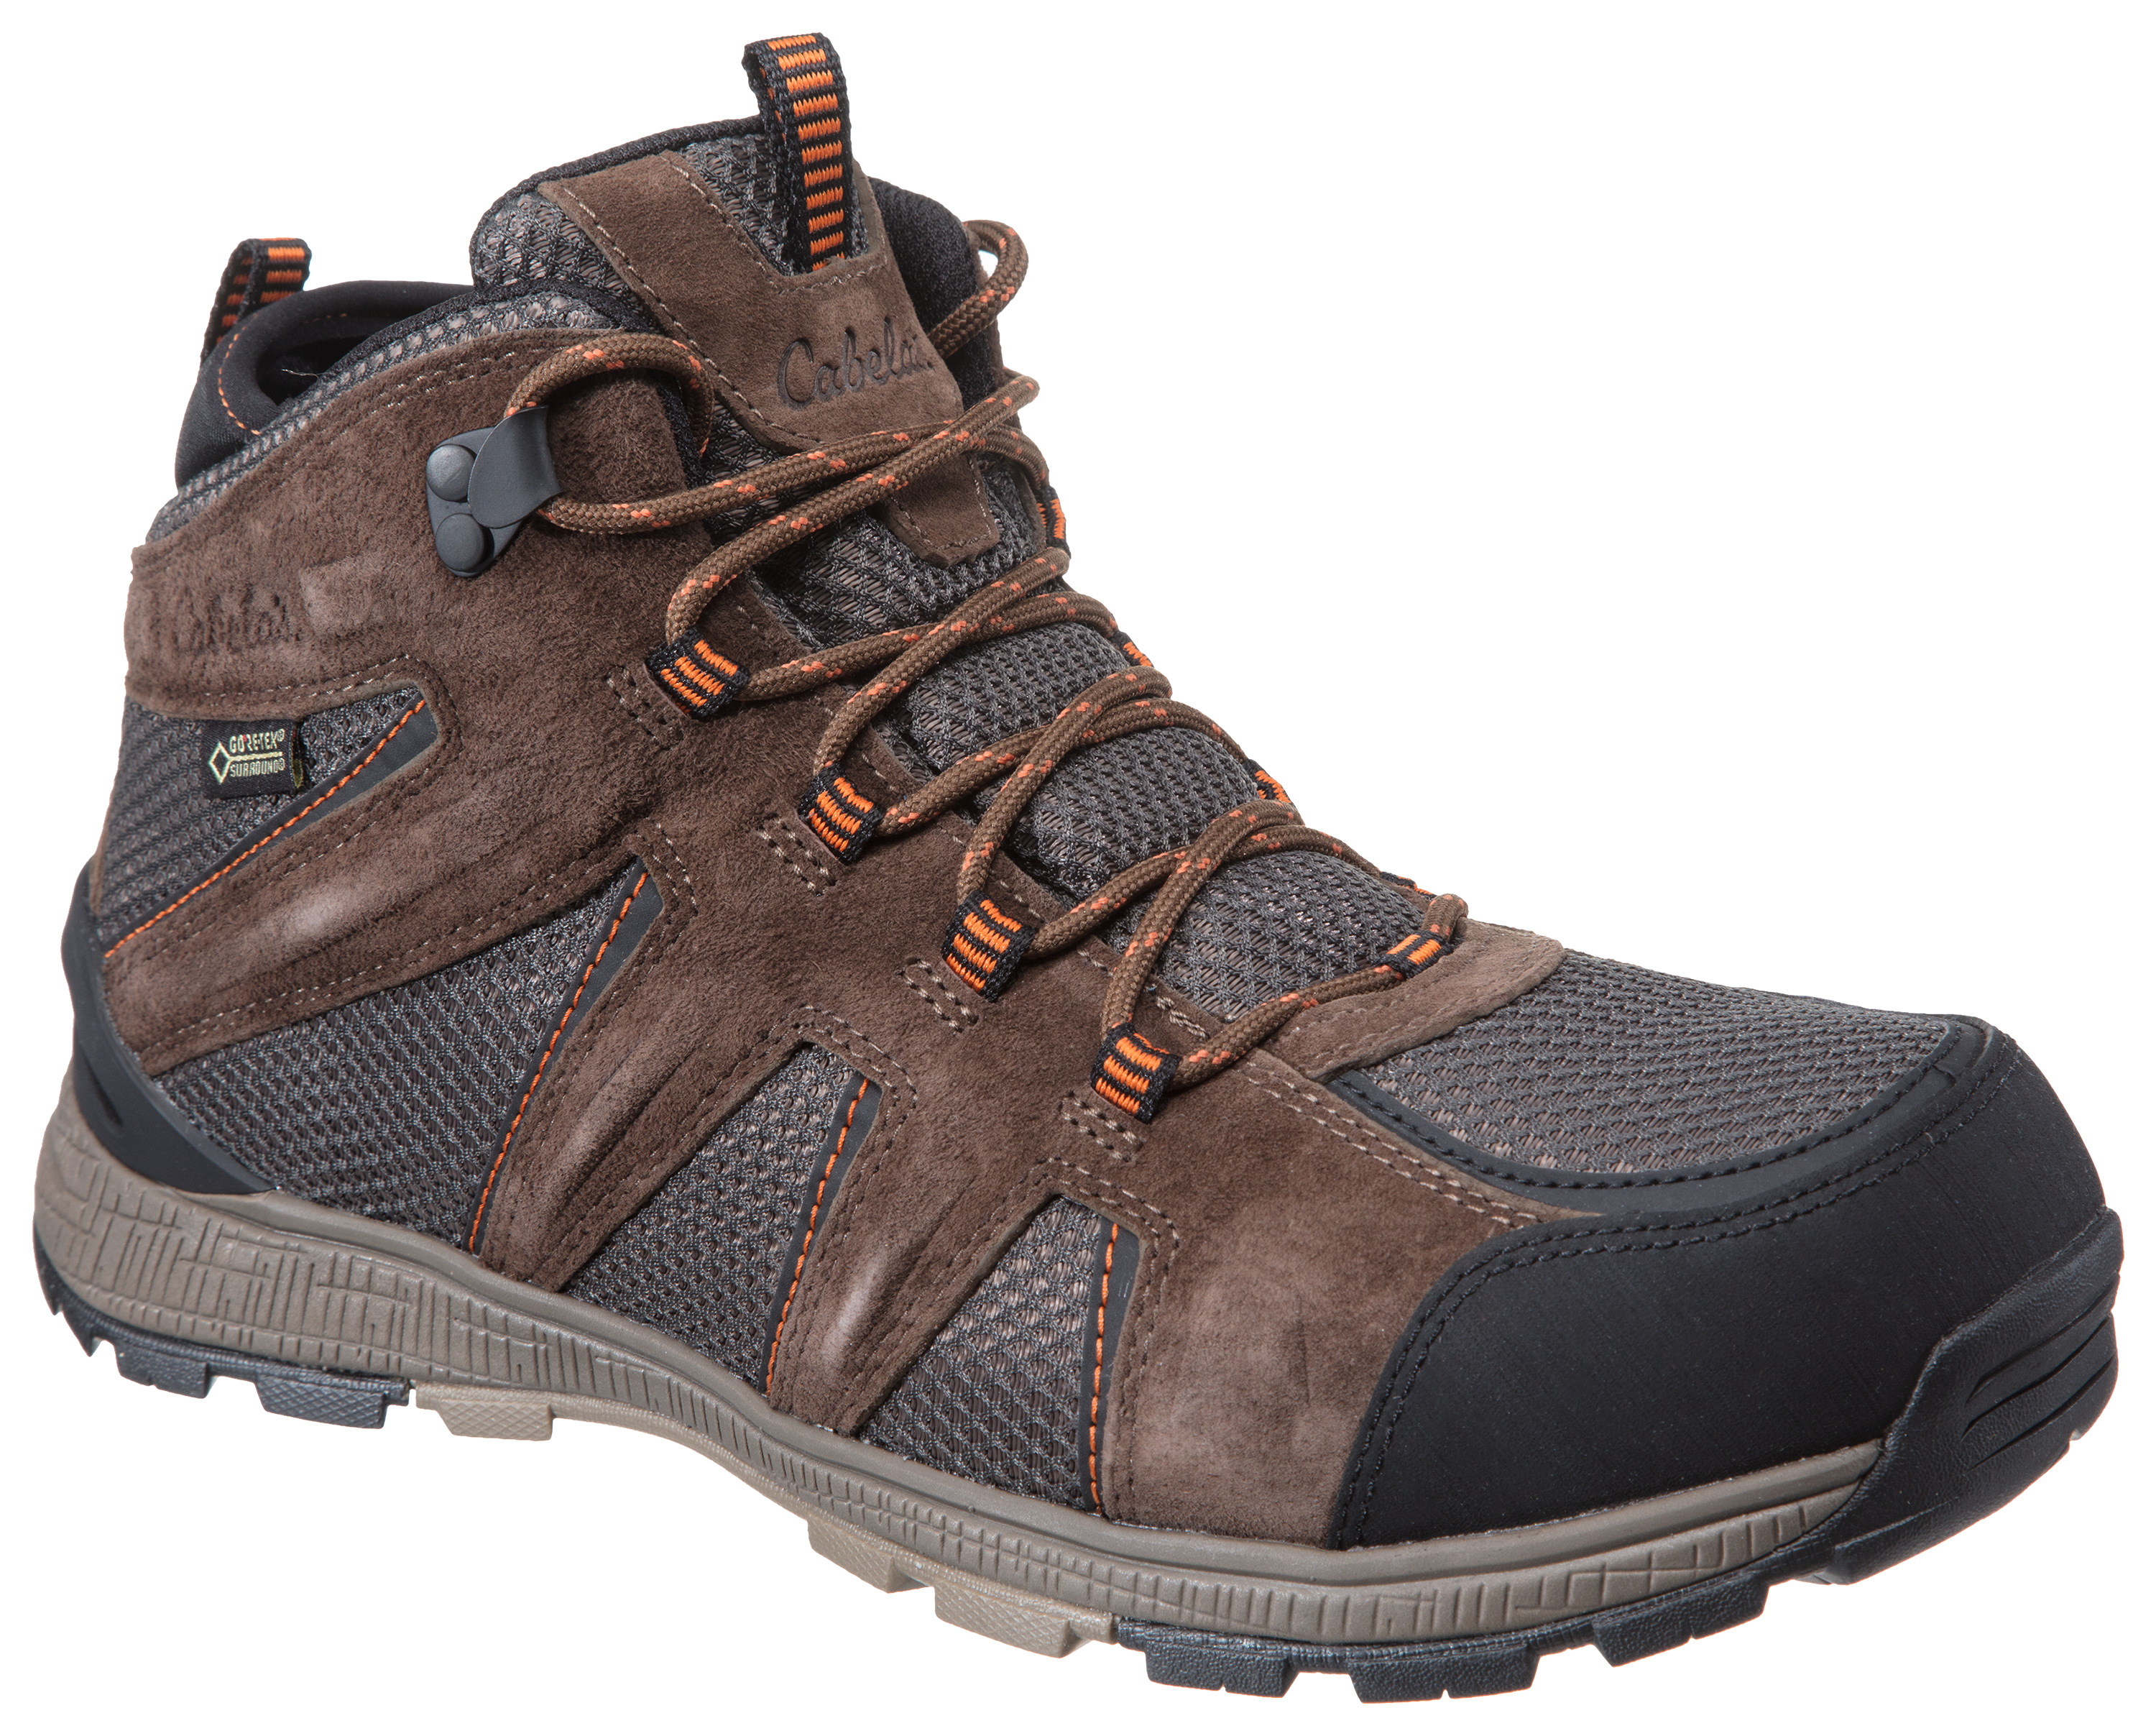 Cabela's 360 Mid GORE-TEX Hiking Boots for Men - Teak - 8M